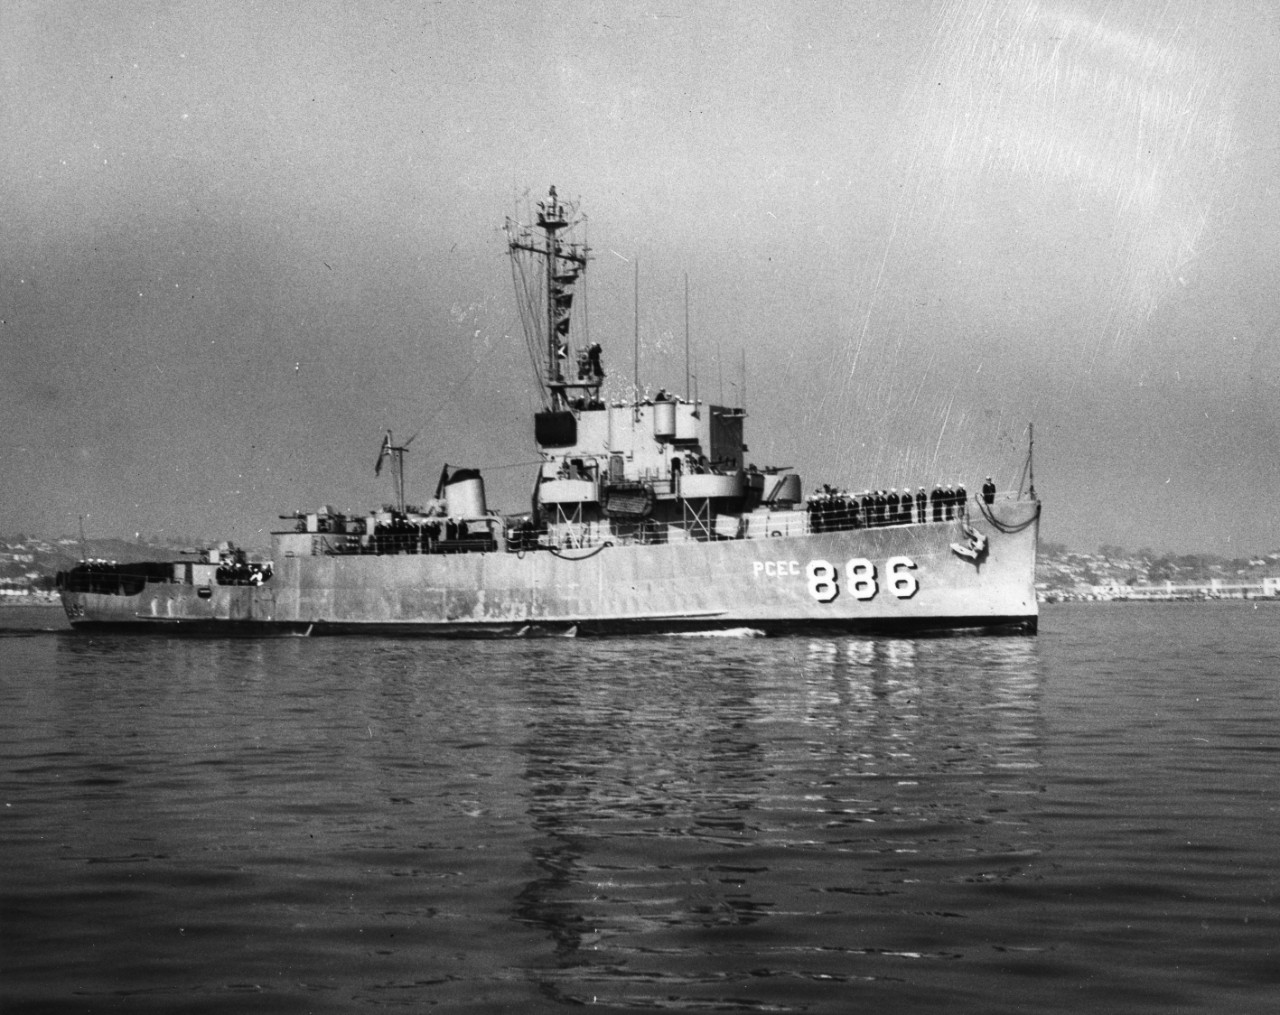 USS Banning (PCEC-886)